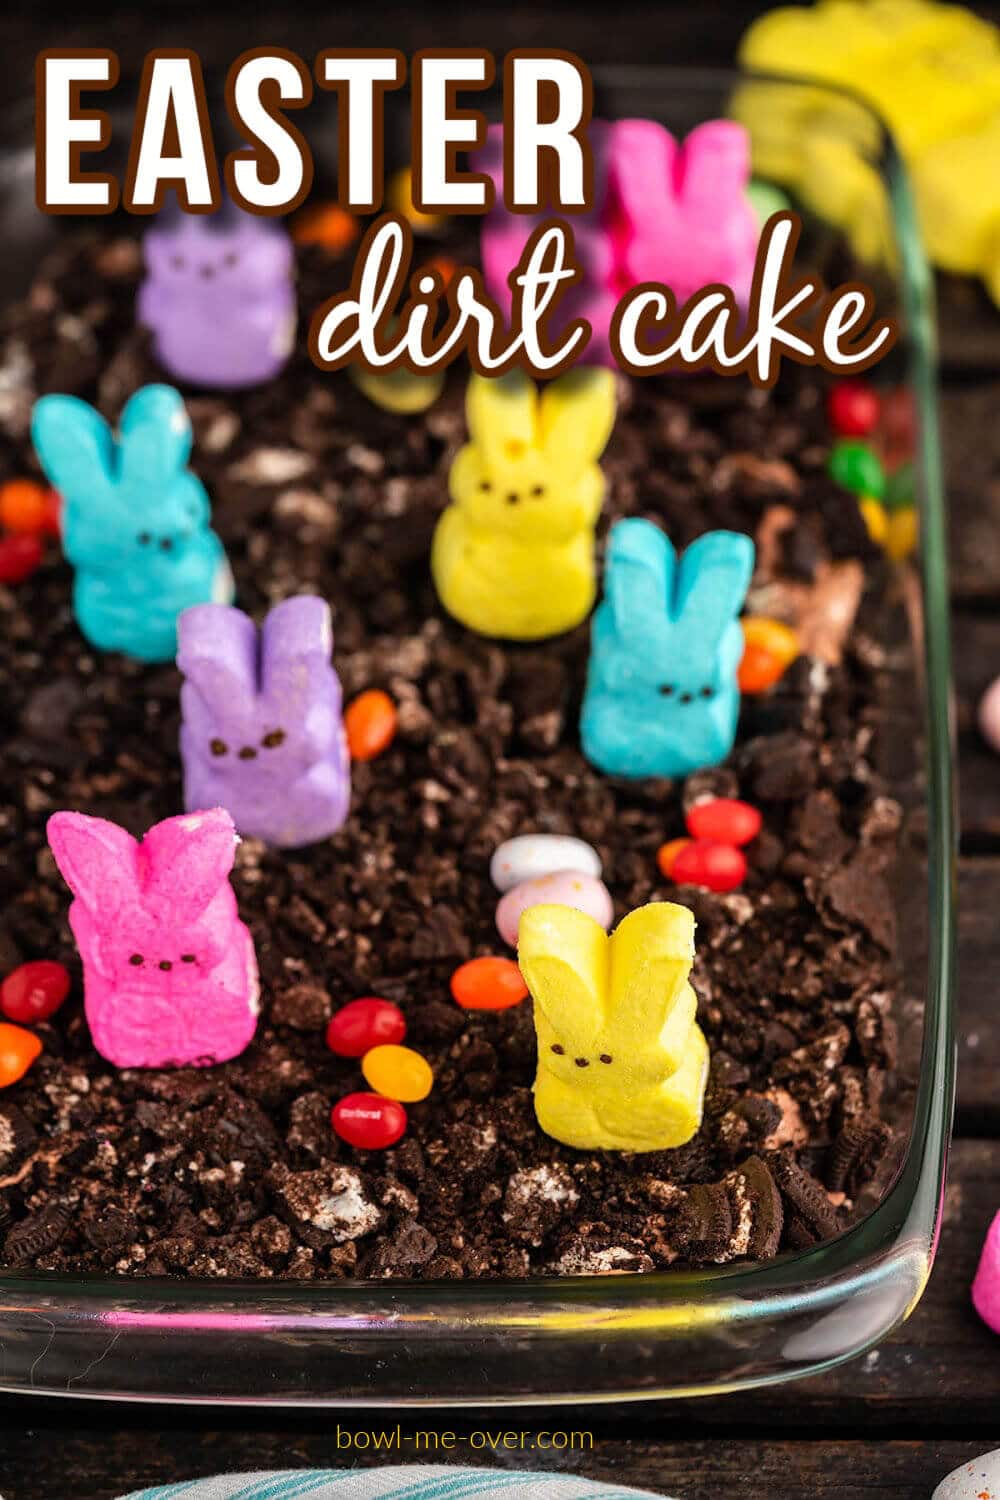 https://bowl-me-over.com/wp-content/uploads/2022/04/Easter-Dirt-Cake.jpg